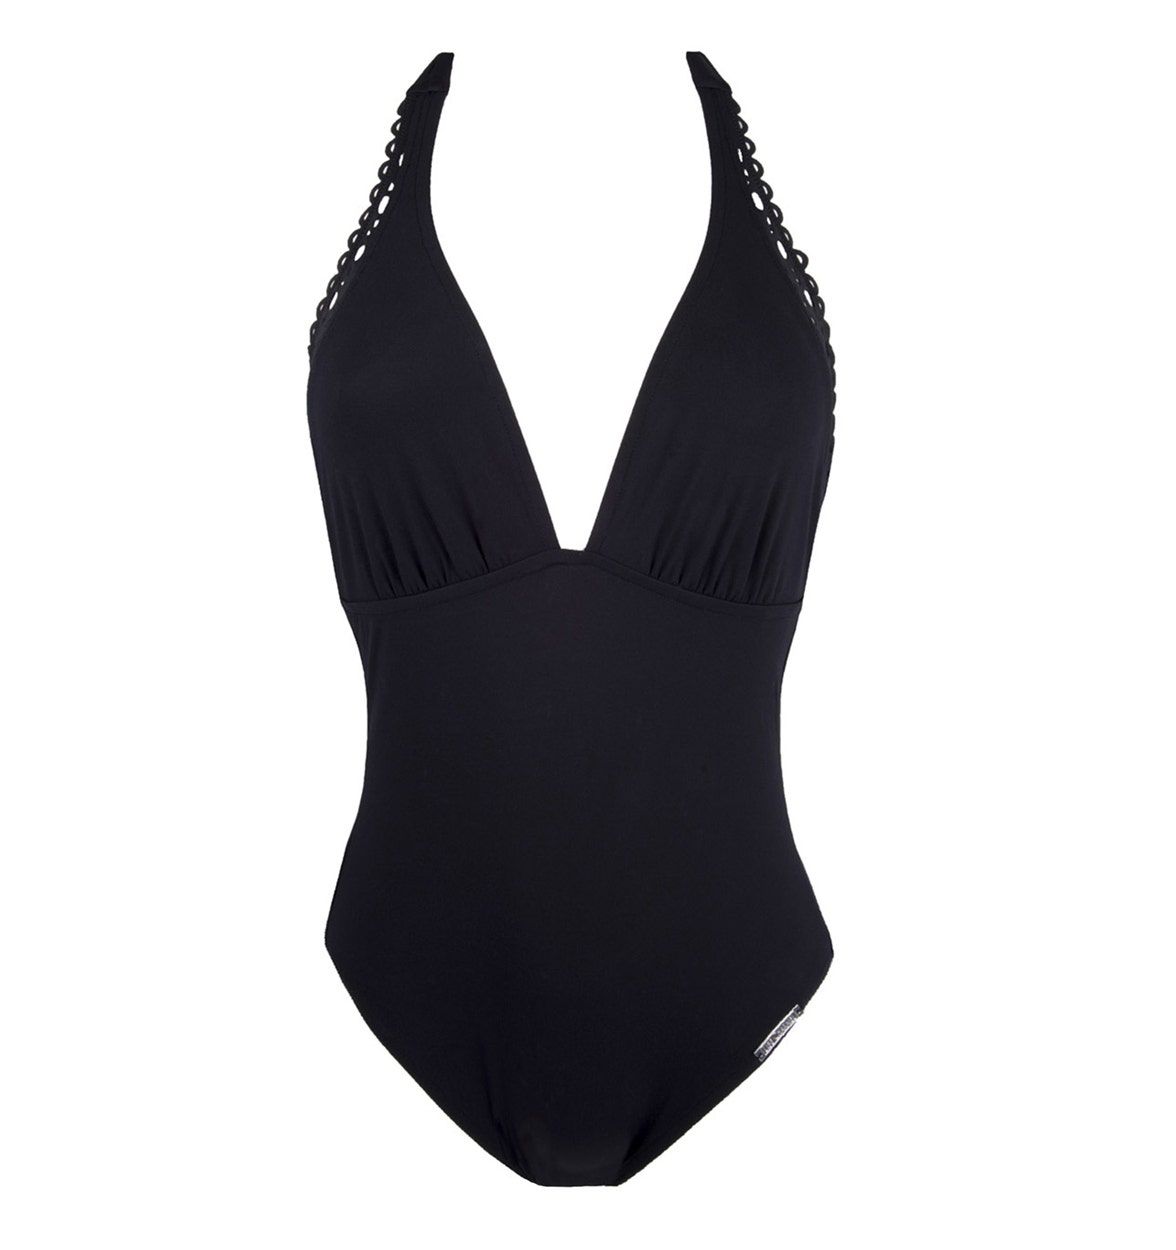 LISE CHARMEL black one-piece swimsuit INTERO SEXY